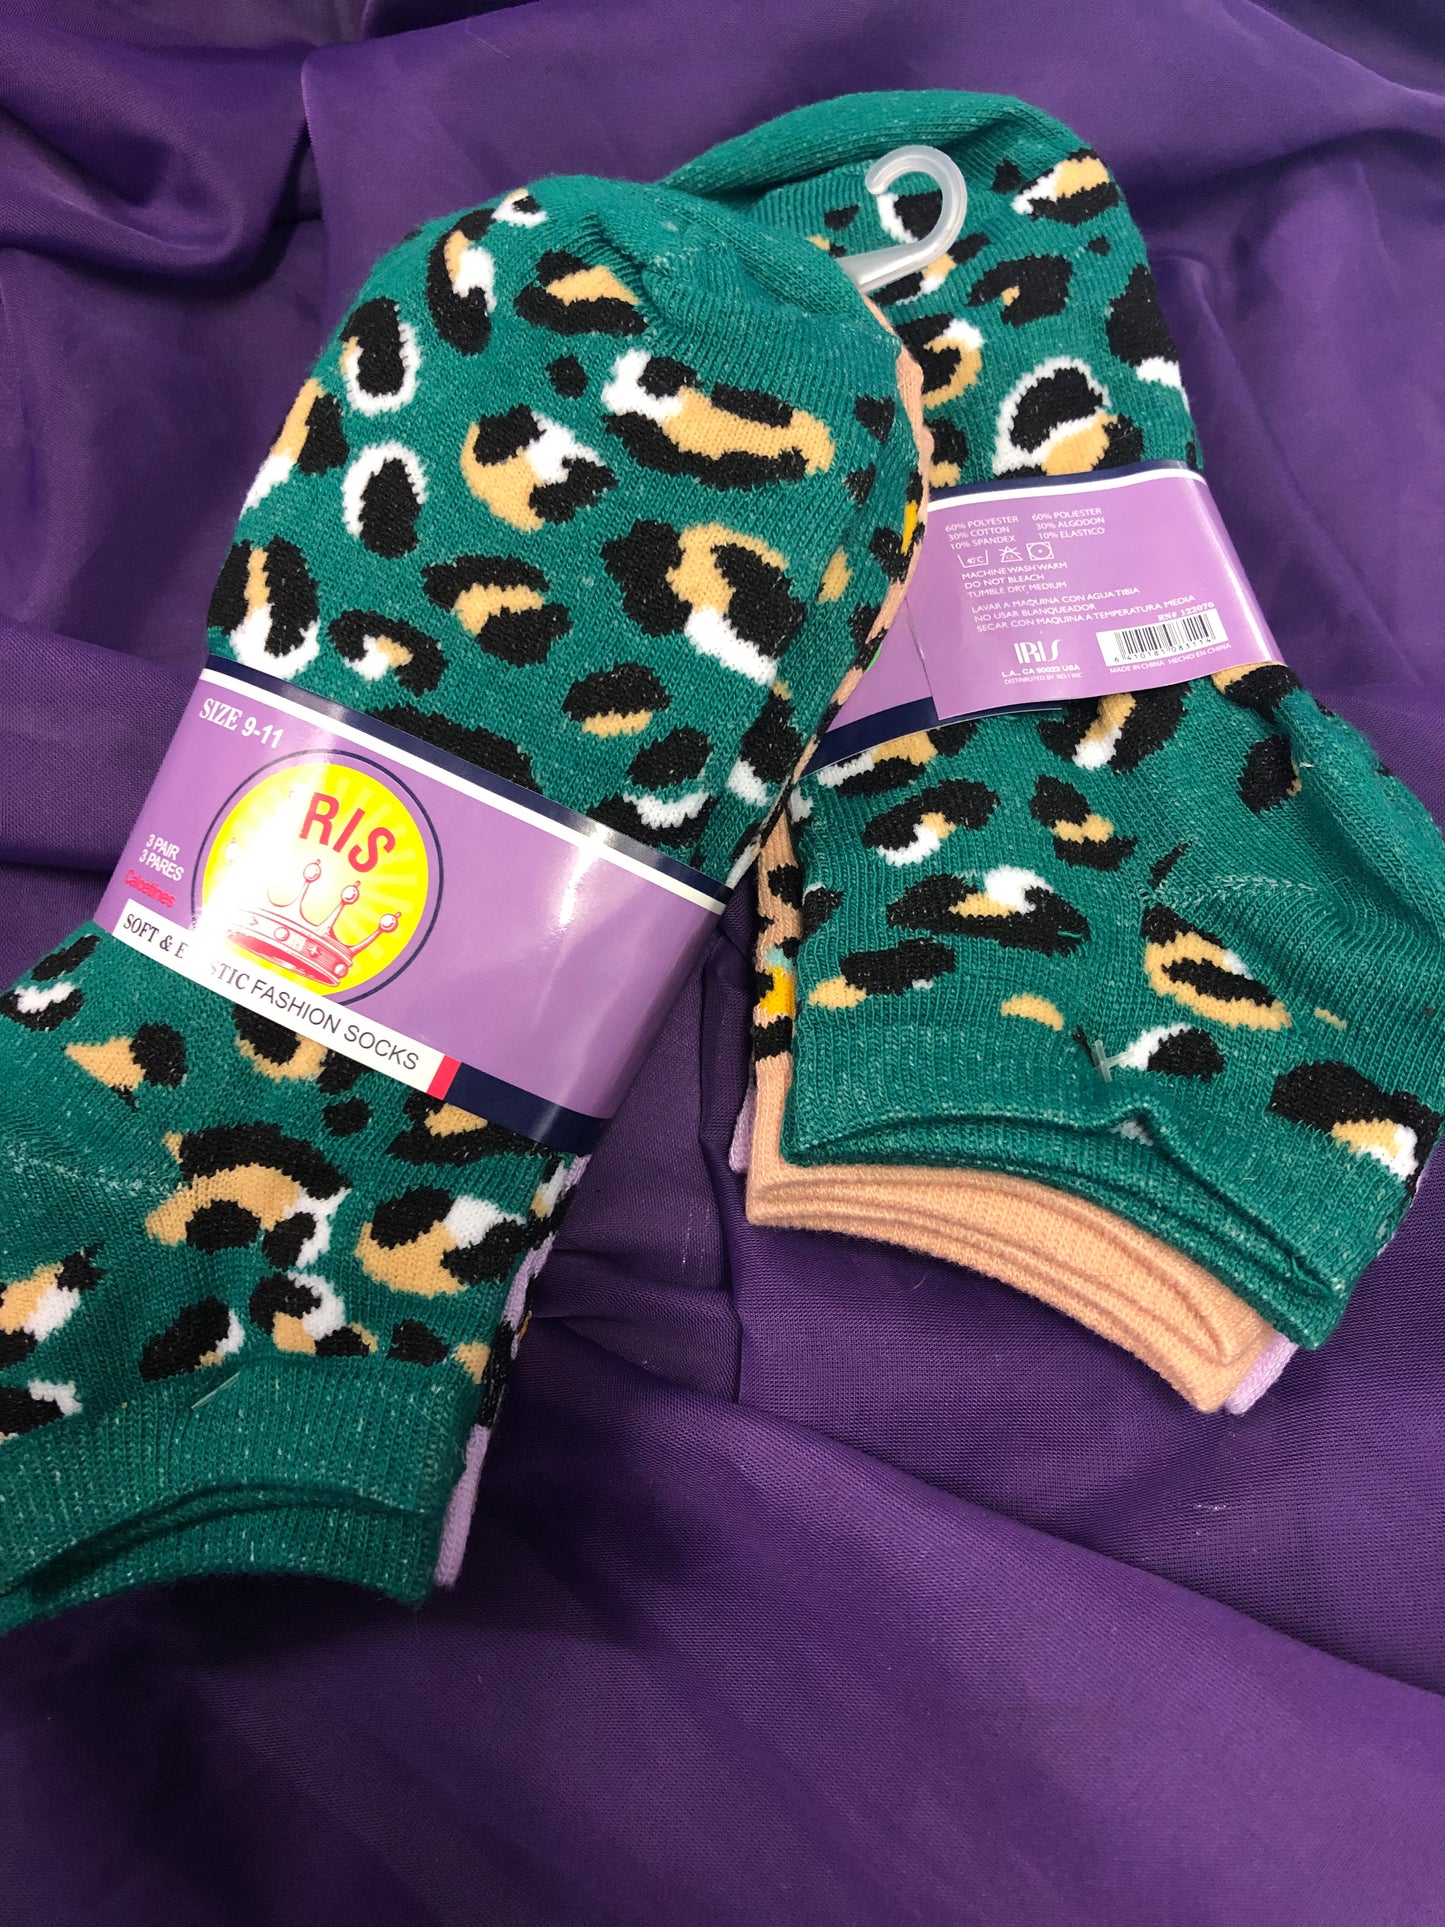 Woman Fashion Soft & Elastic Socks3/Pair Size 9-11 Cheetah Print Colors (Purple, Tan, Green)Pink, Gray And Black.